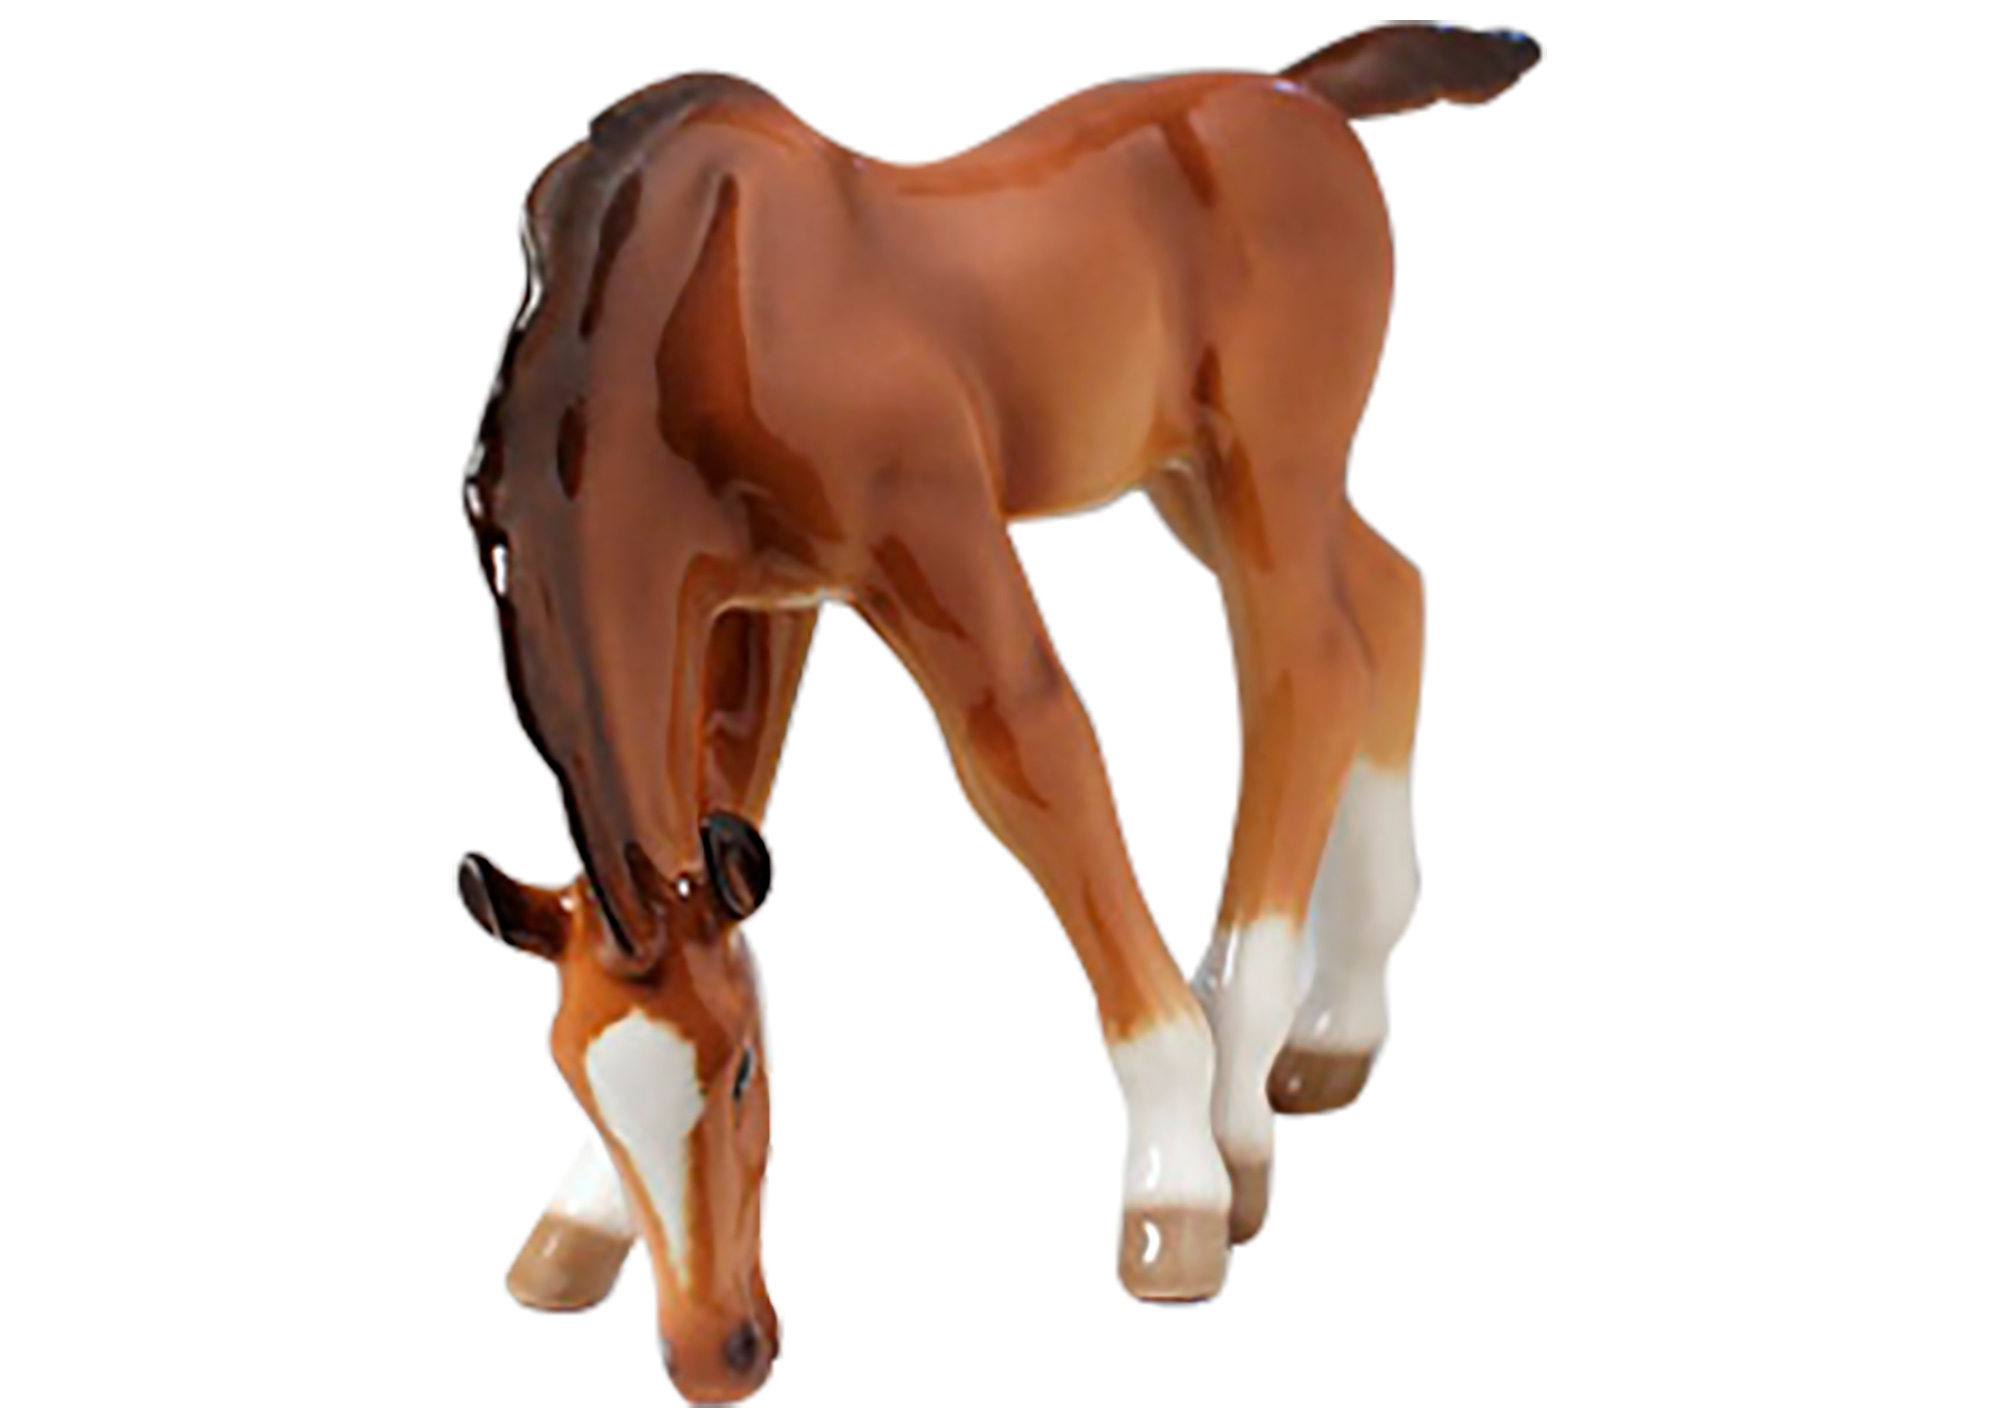 Buy Bay Horse Figurine at GoldenCockerel.com